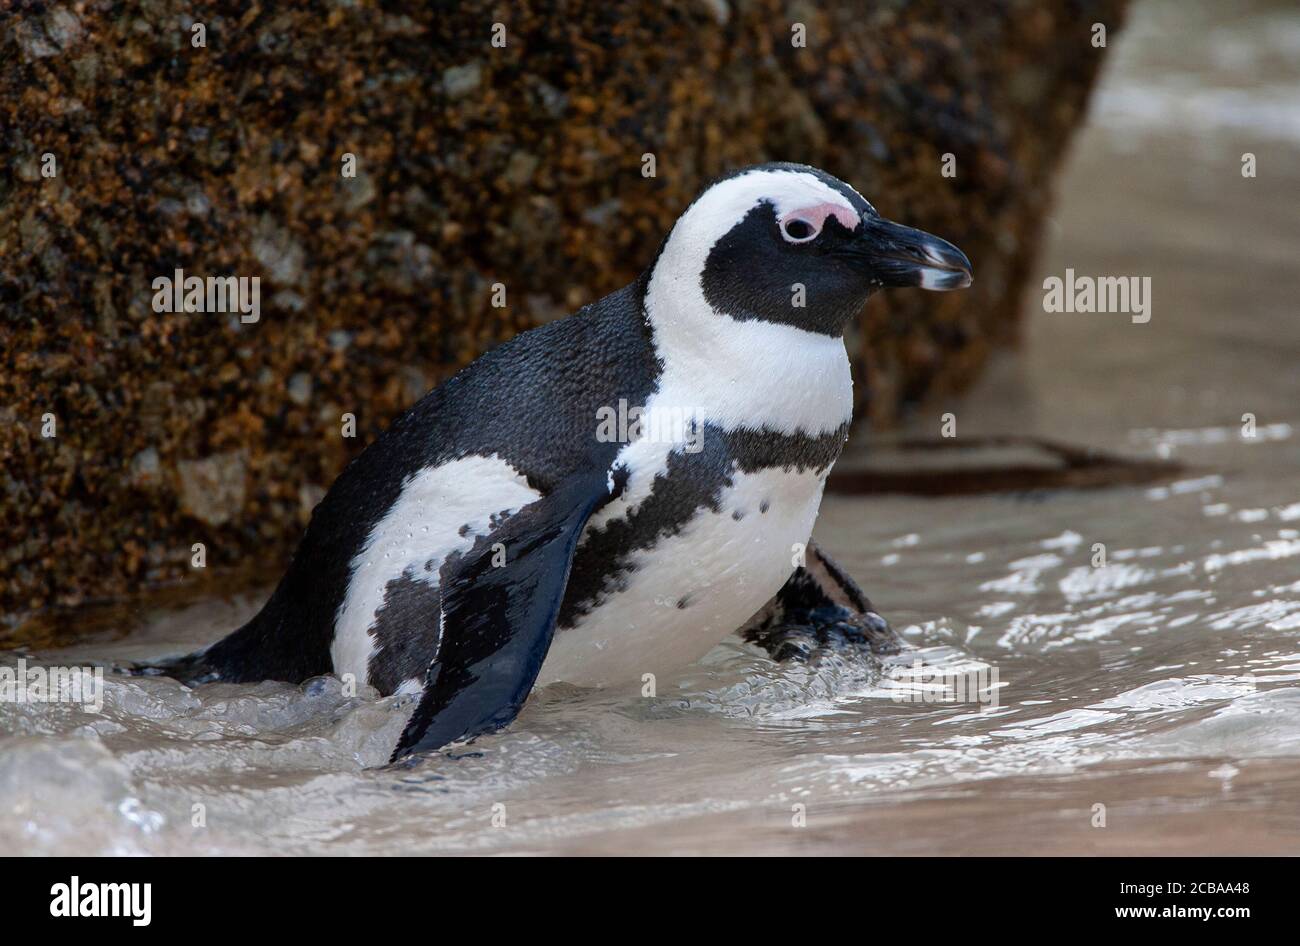 Jackass penguin, African penguin, Black-footed penguin (Spheniscus demersus), schwimmt in seichtem Wasser, South Africa, Western Cape, Simons Town, Boulders Beach Stock Photo